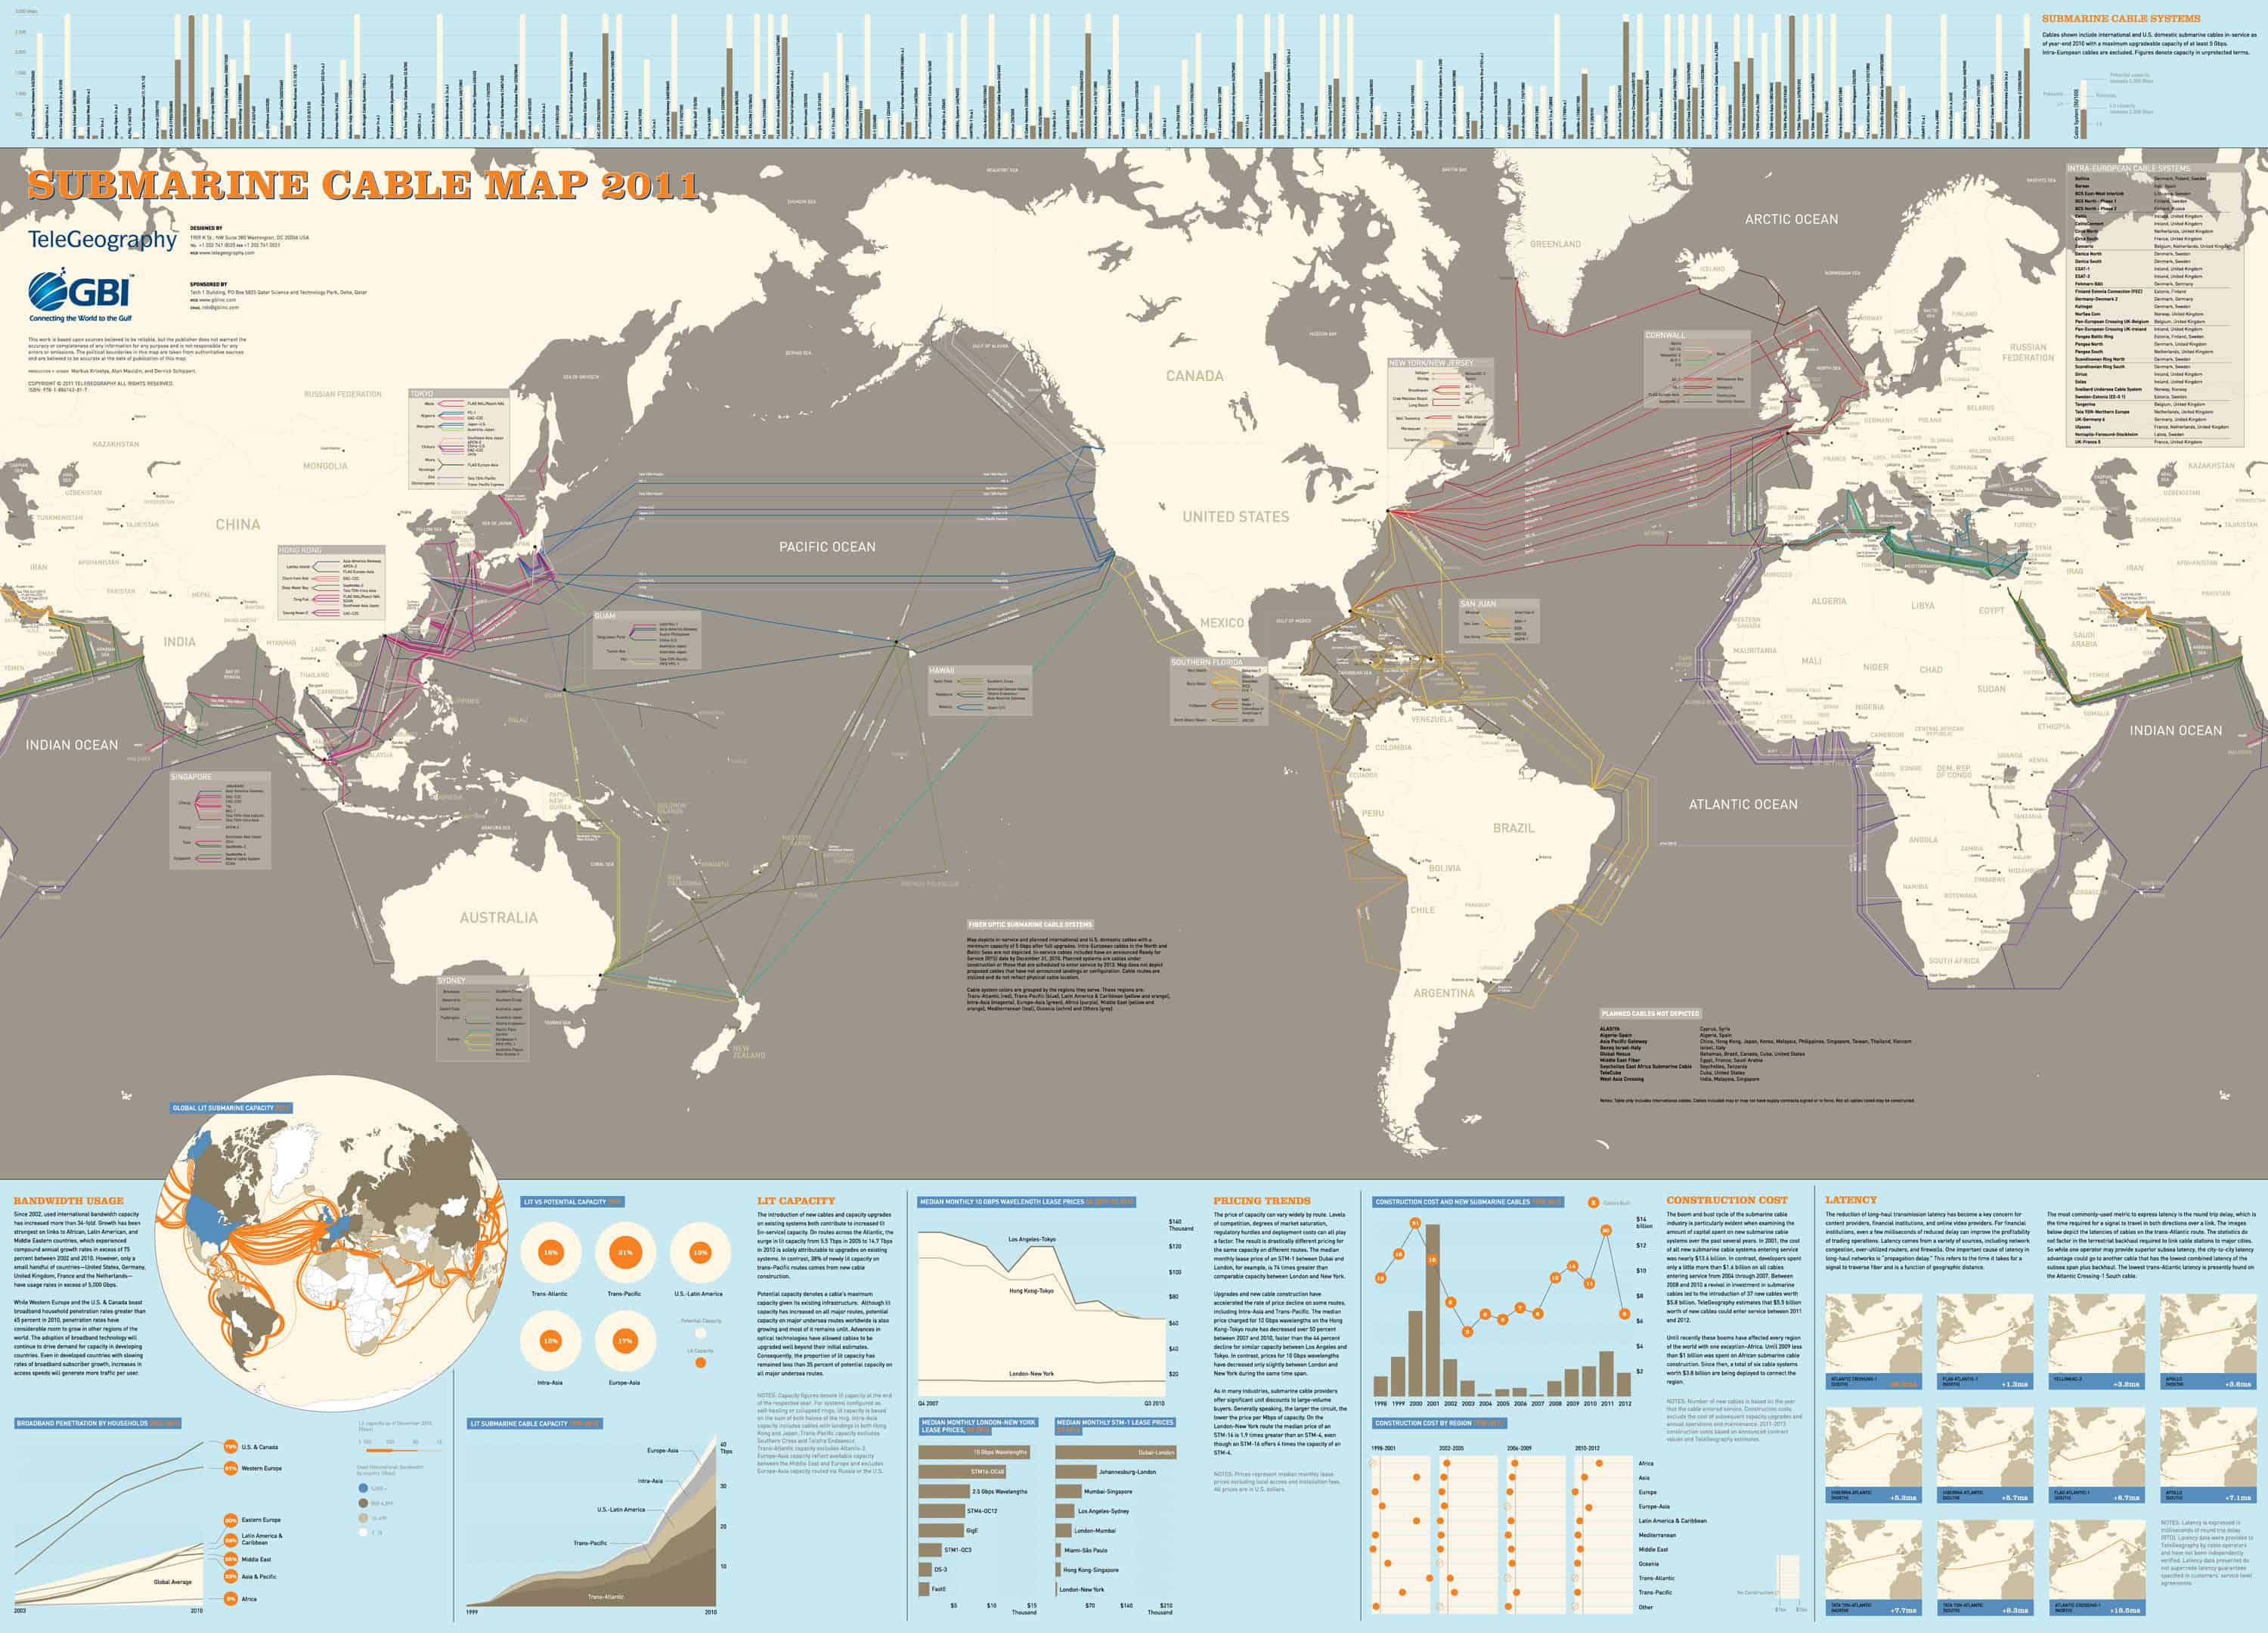 2011 Internet World Submarine Cable Mapglobalization